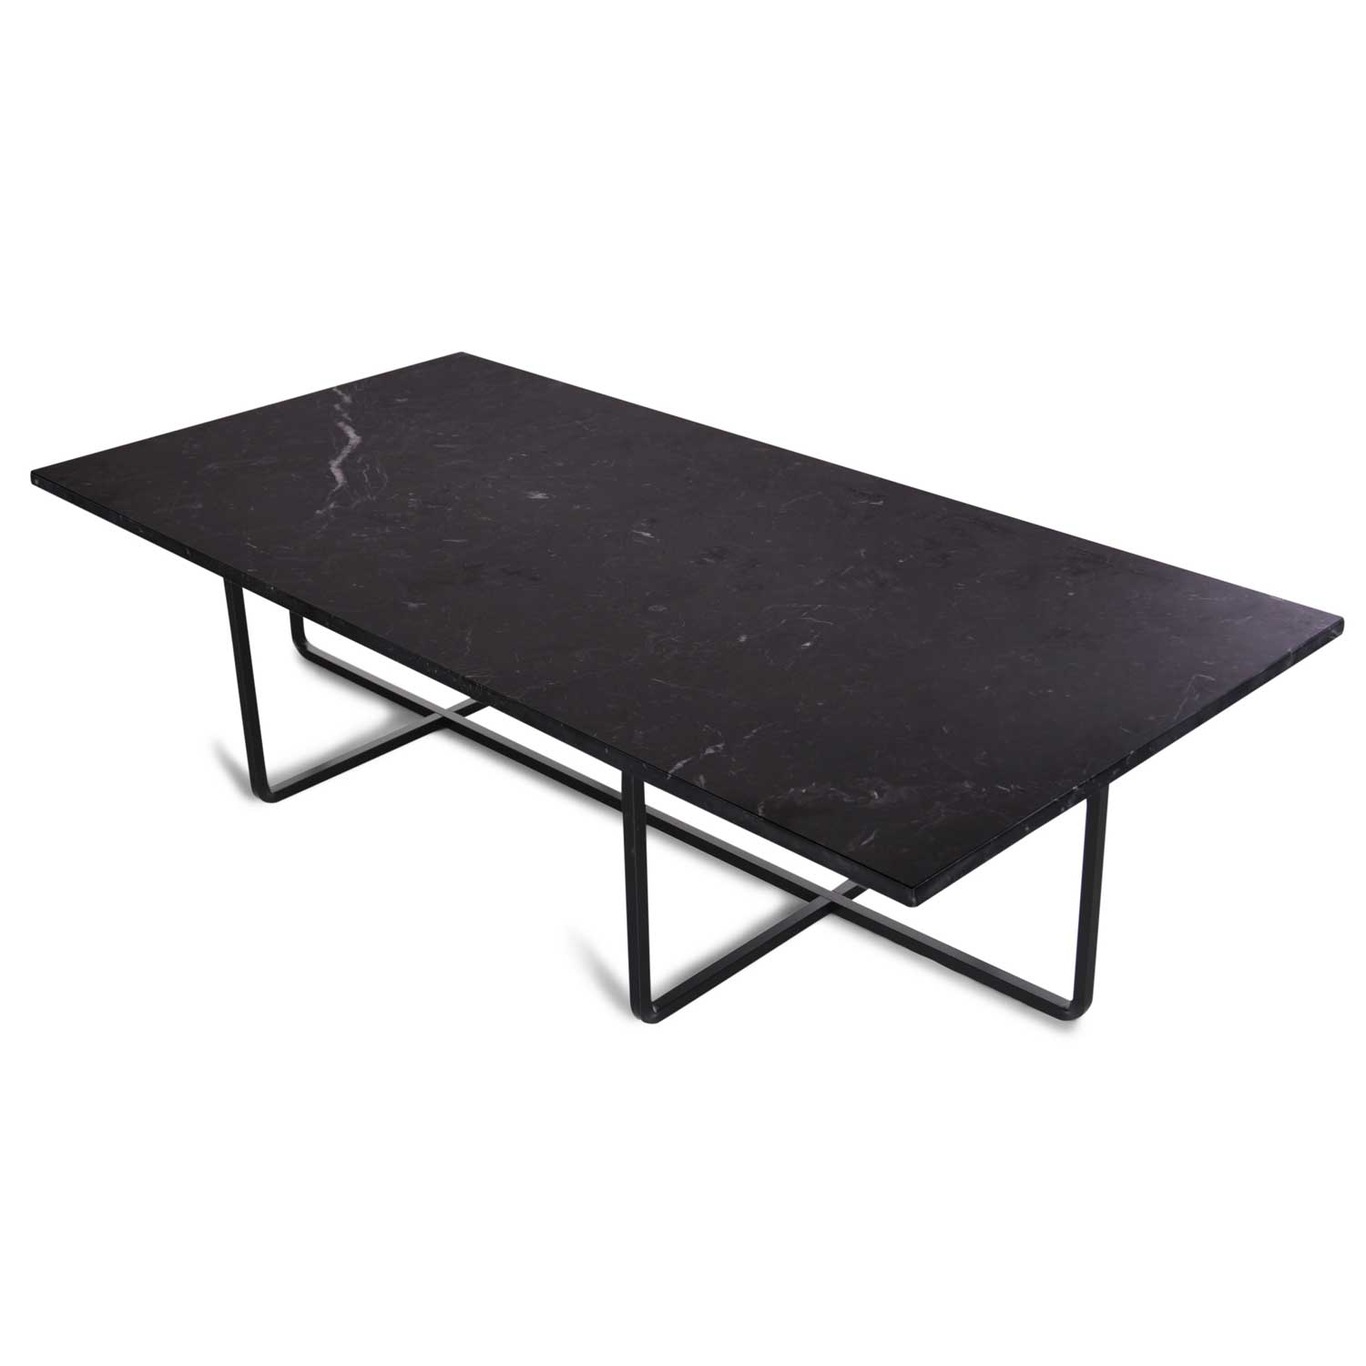 Ninety Sohvapöytä 120x60cm, Musta Marmori/Musta